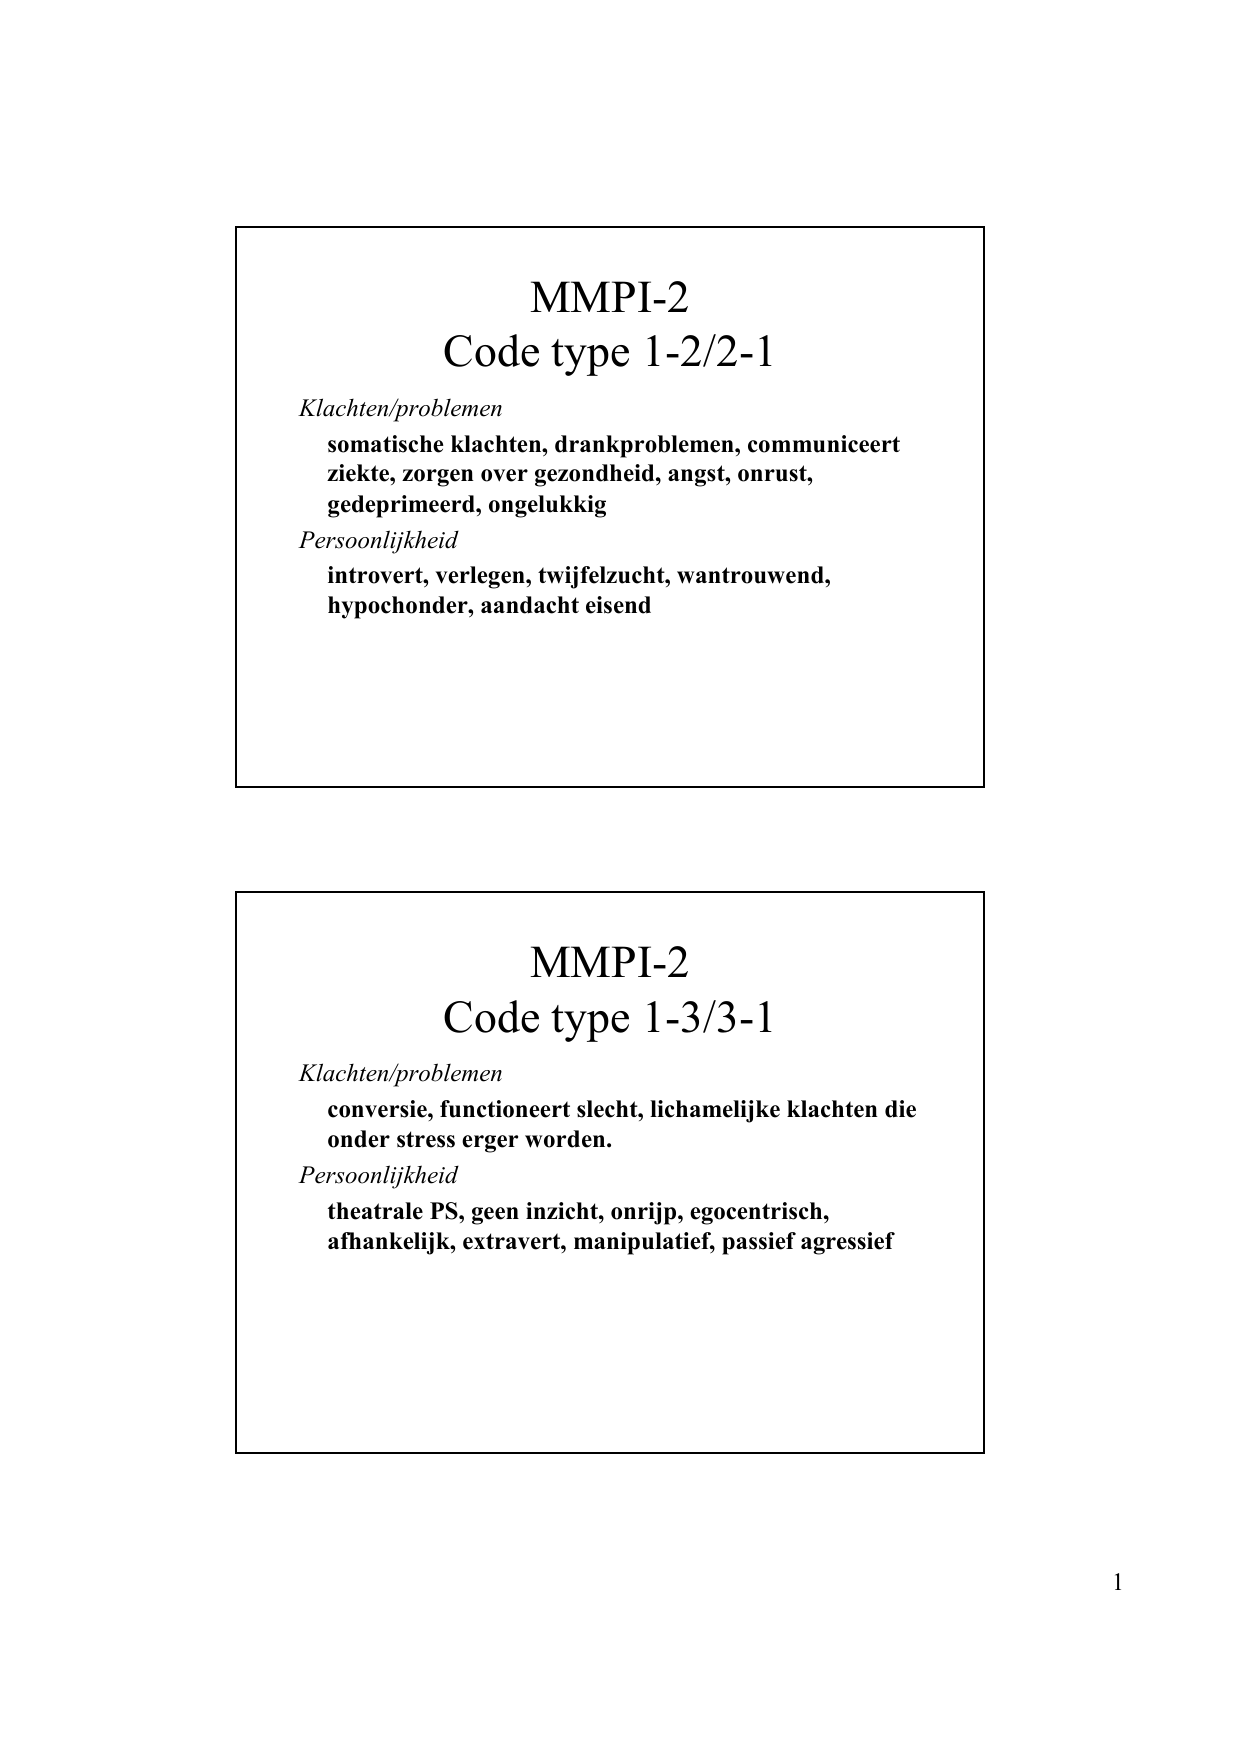 mmpi 2 code types